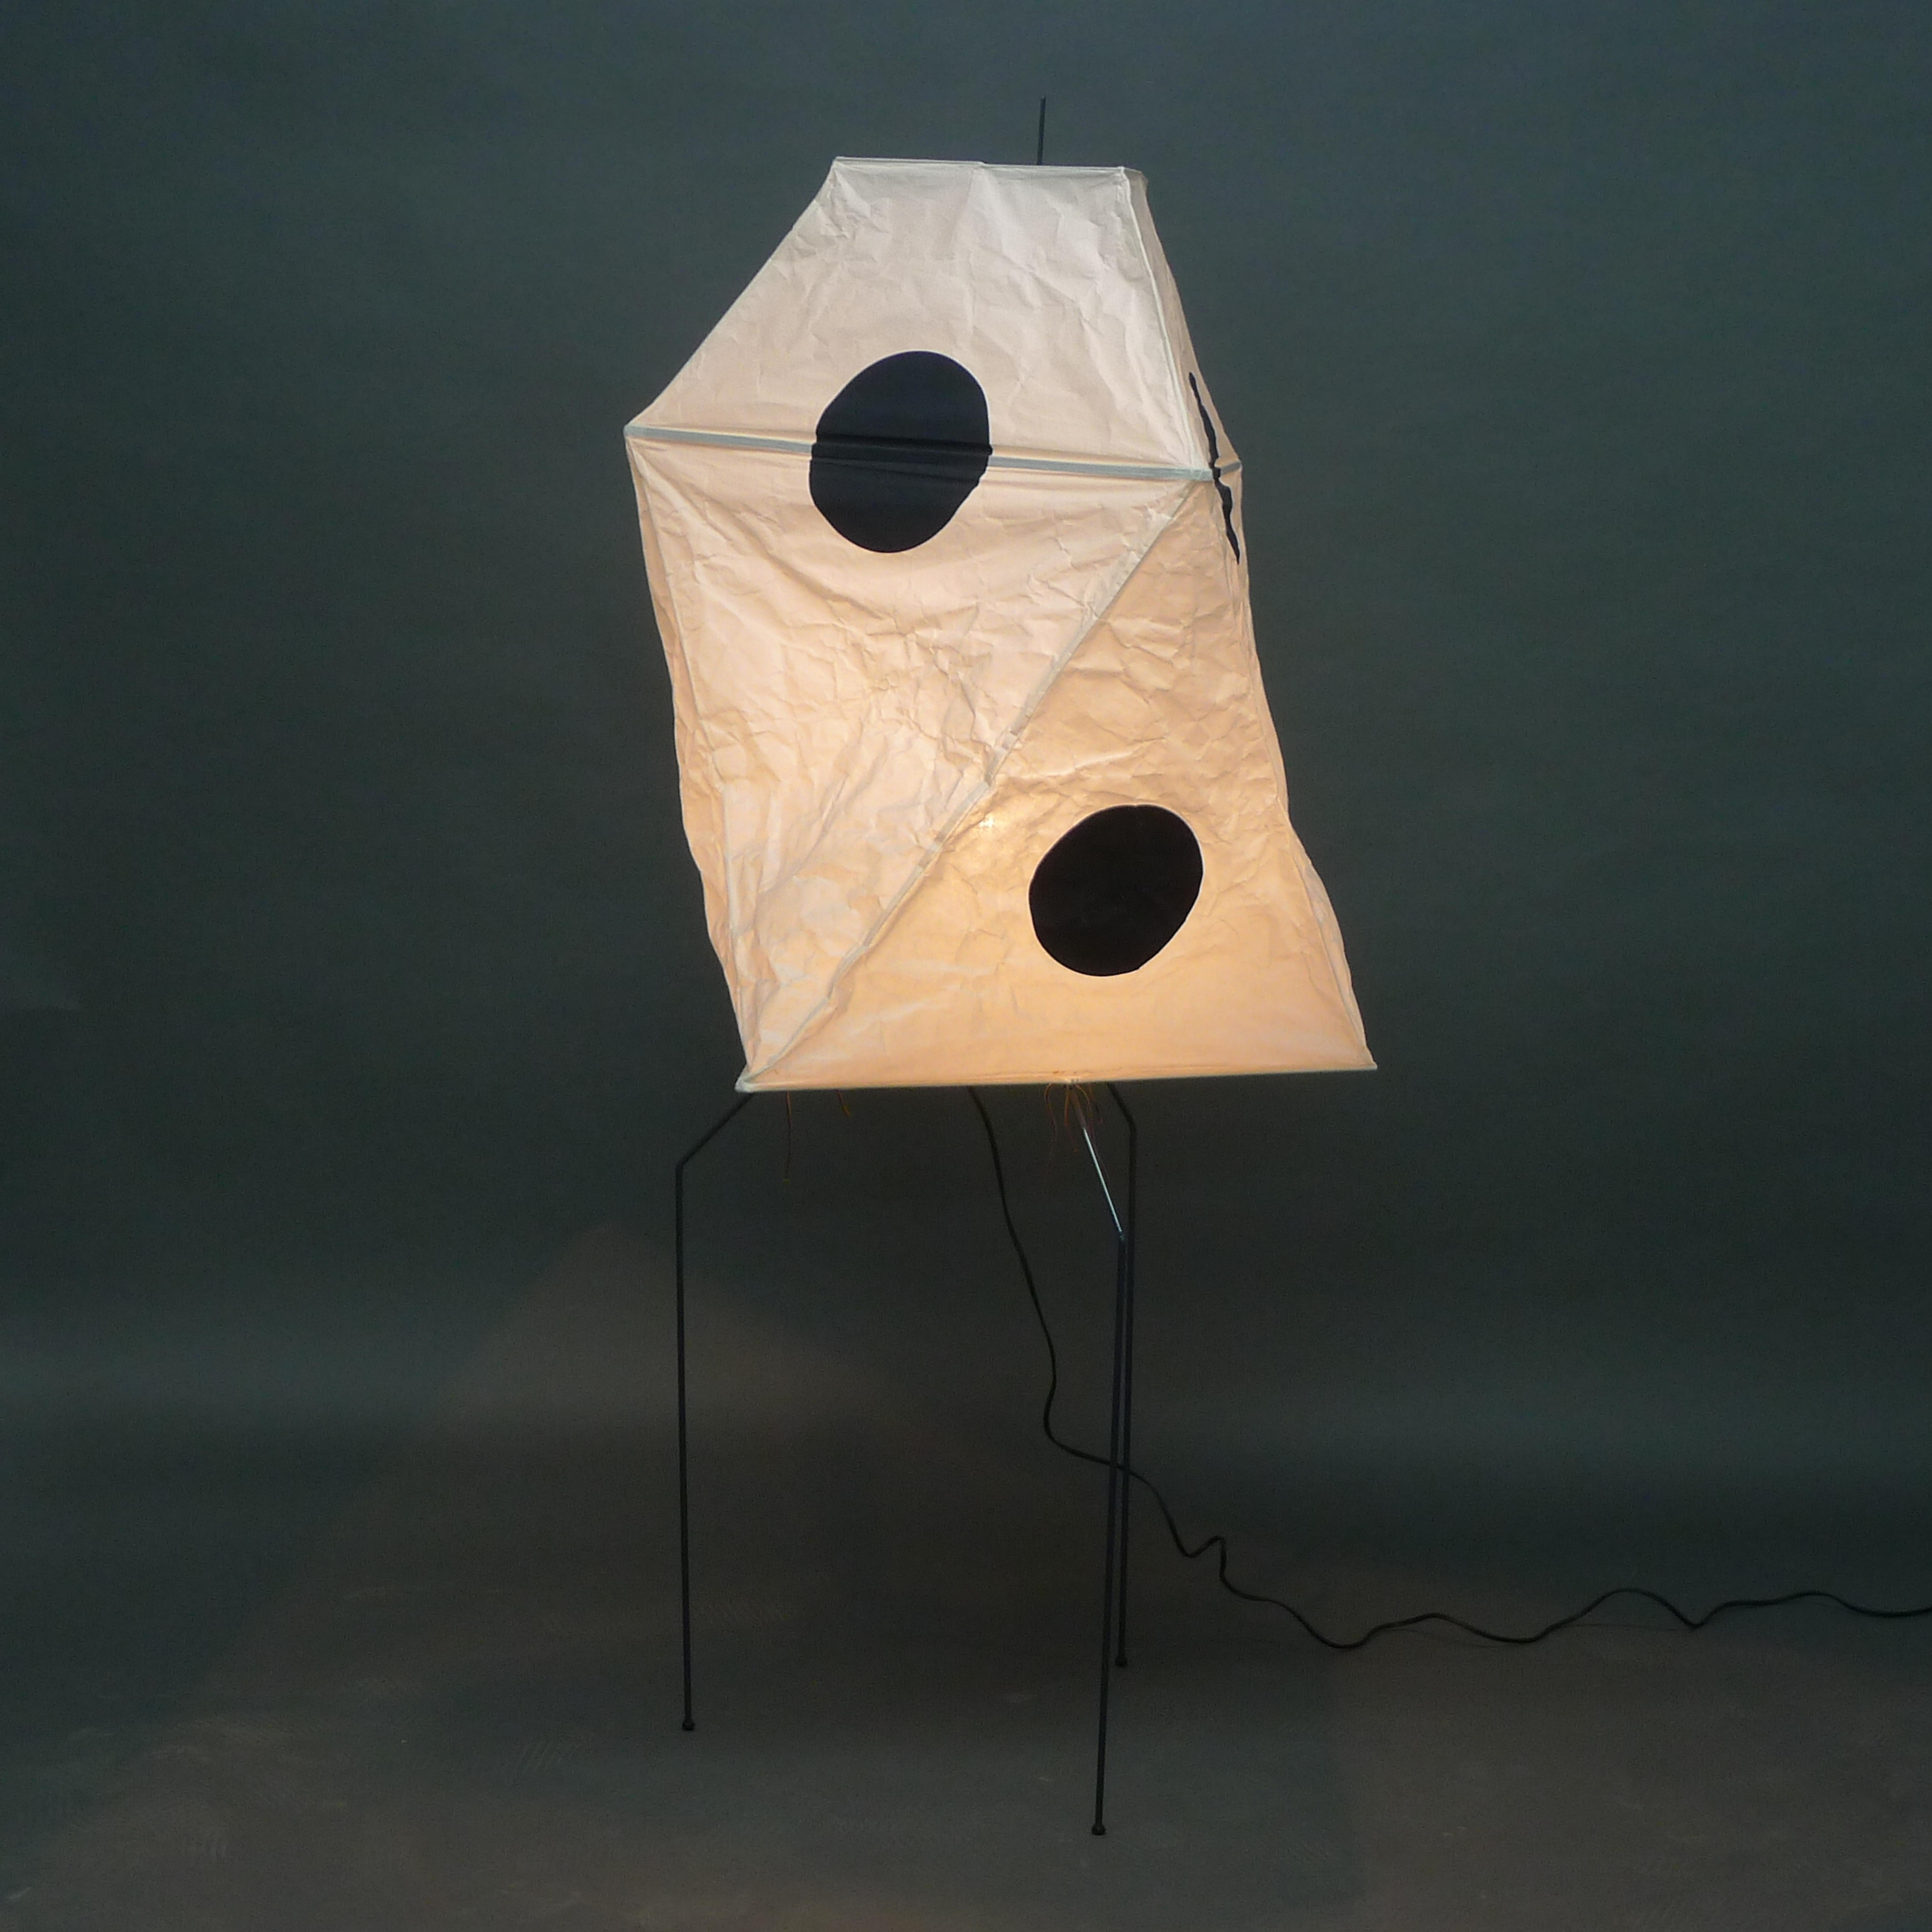 Metal Isamu Noguchi Floor Light, Akari UF3-Q, Washi Paper Shade with Black Spheres